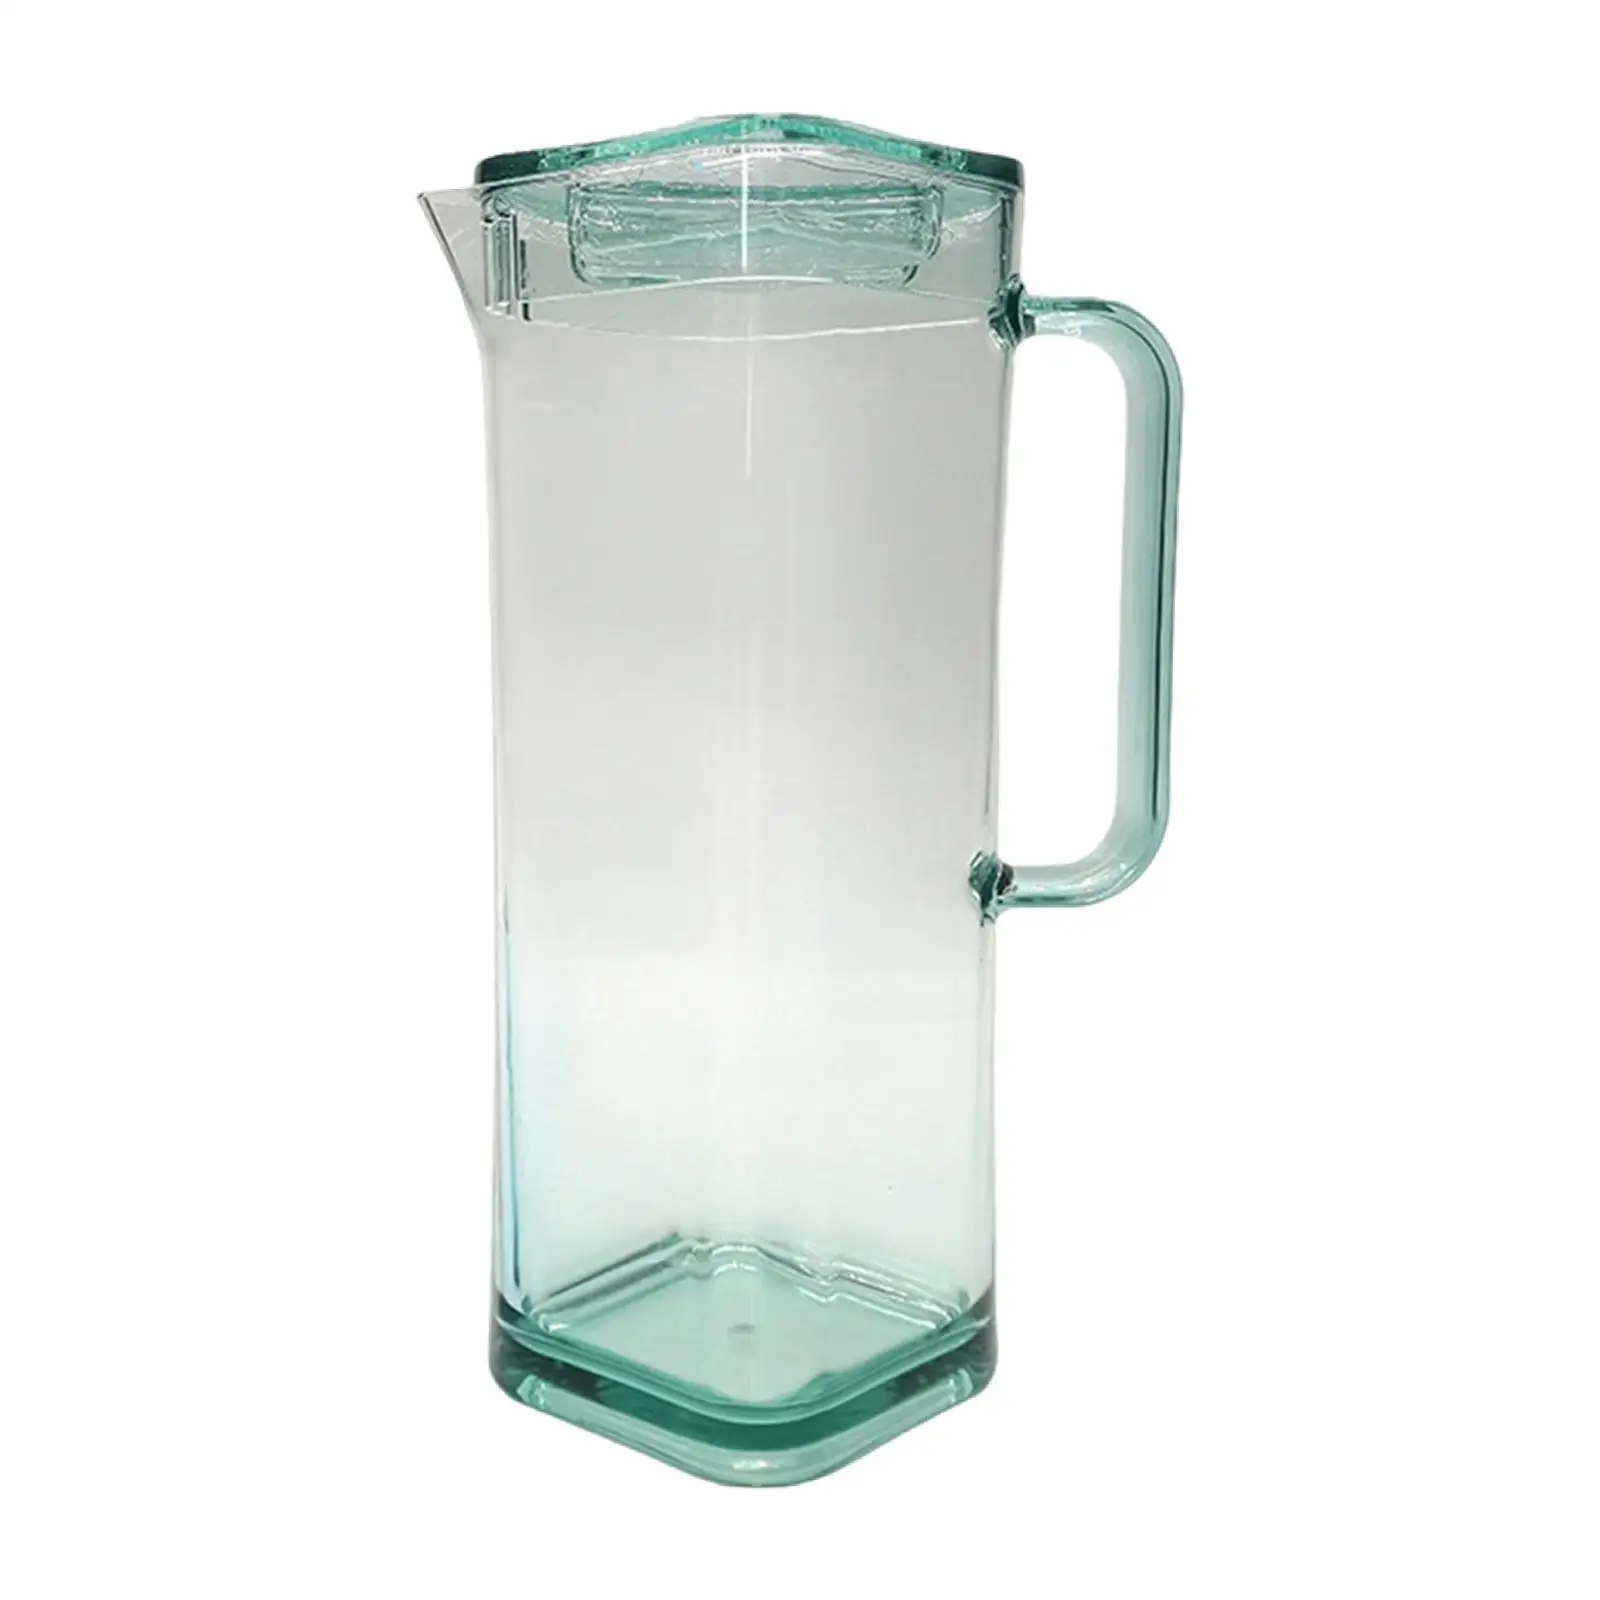 Iced Beverage Dispenser 2L Large Capacity Juice Containers Cold Kettle Teapot for Loose Leaf Lemonade cold Beverage